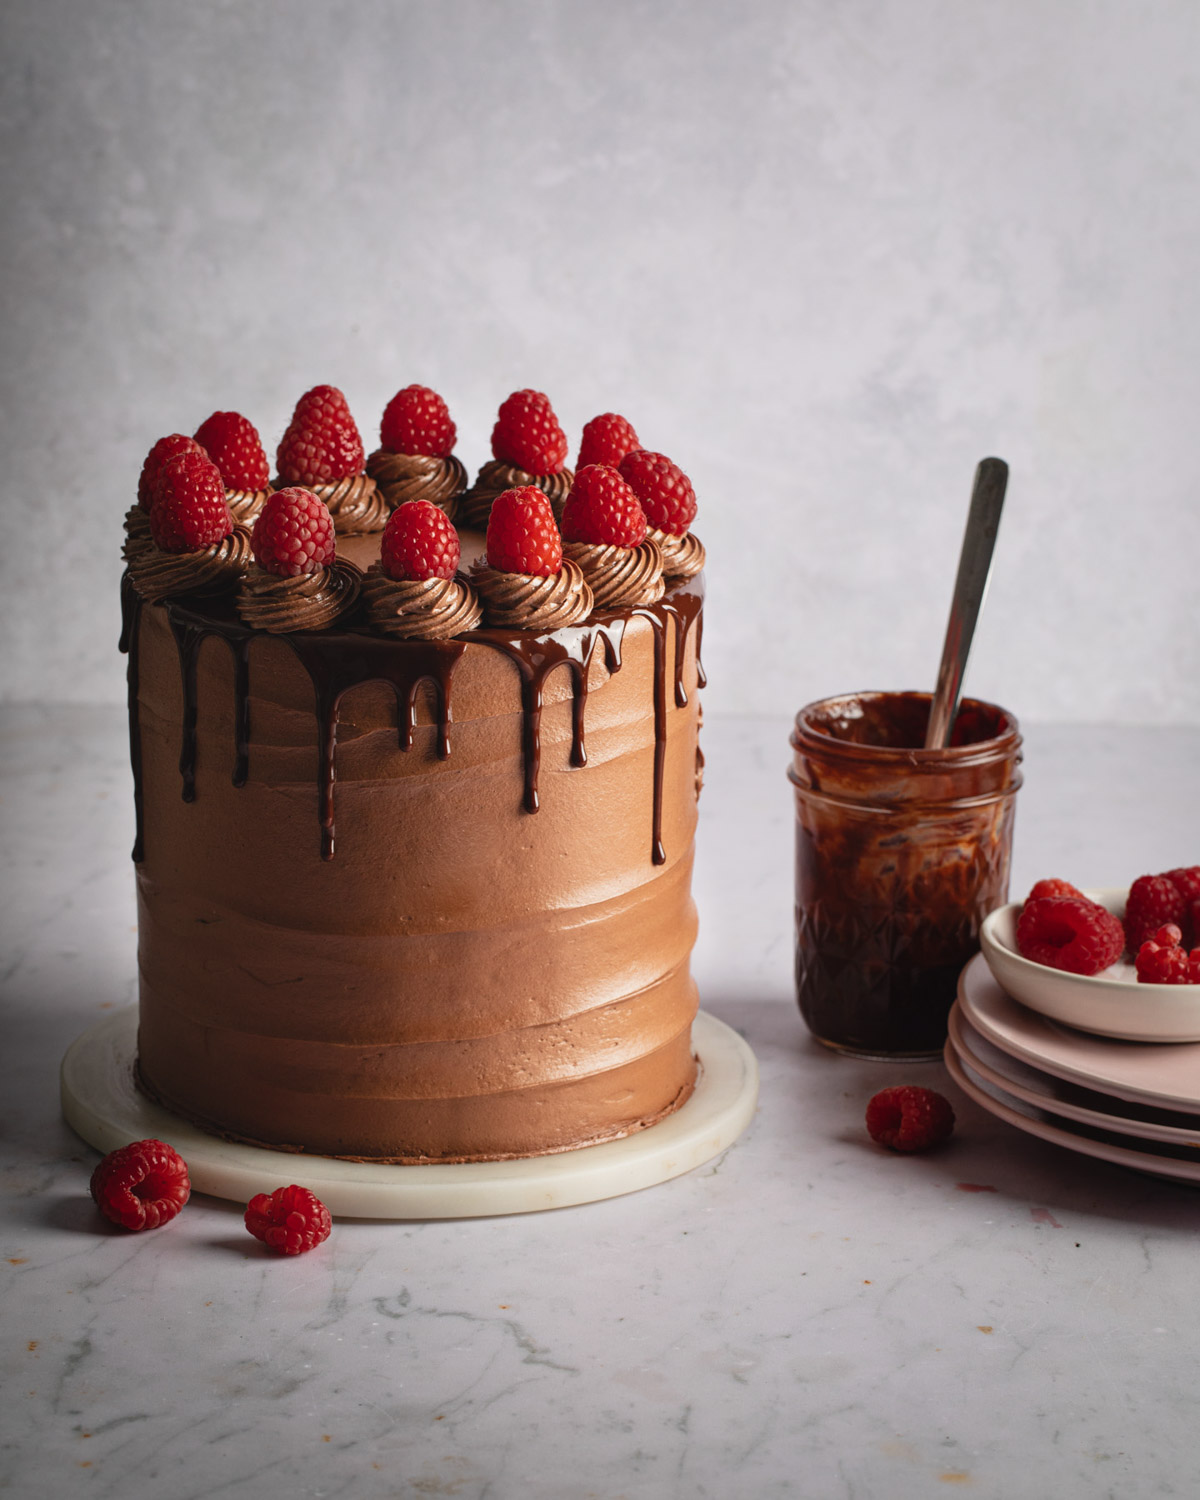 Brownie Nutella Cake with fresh raspberries on top